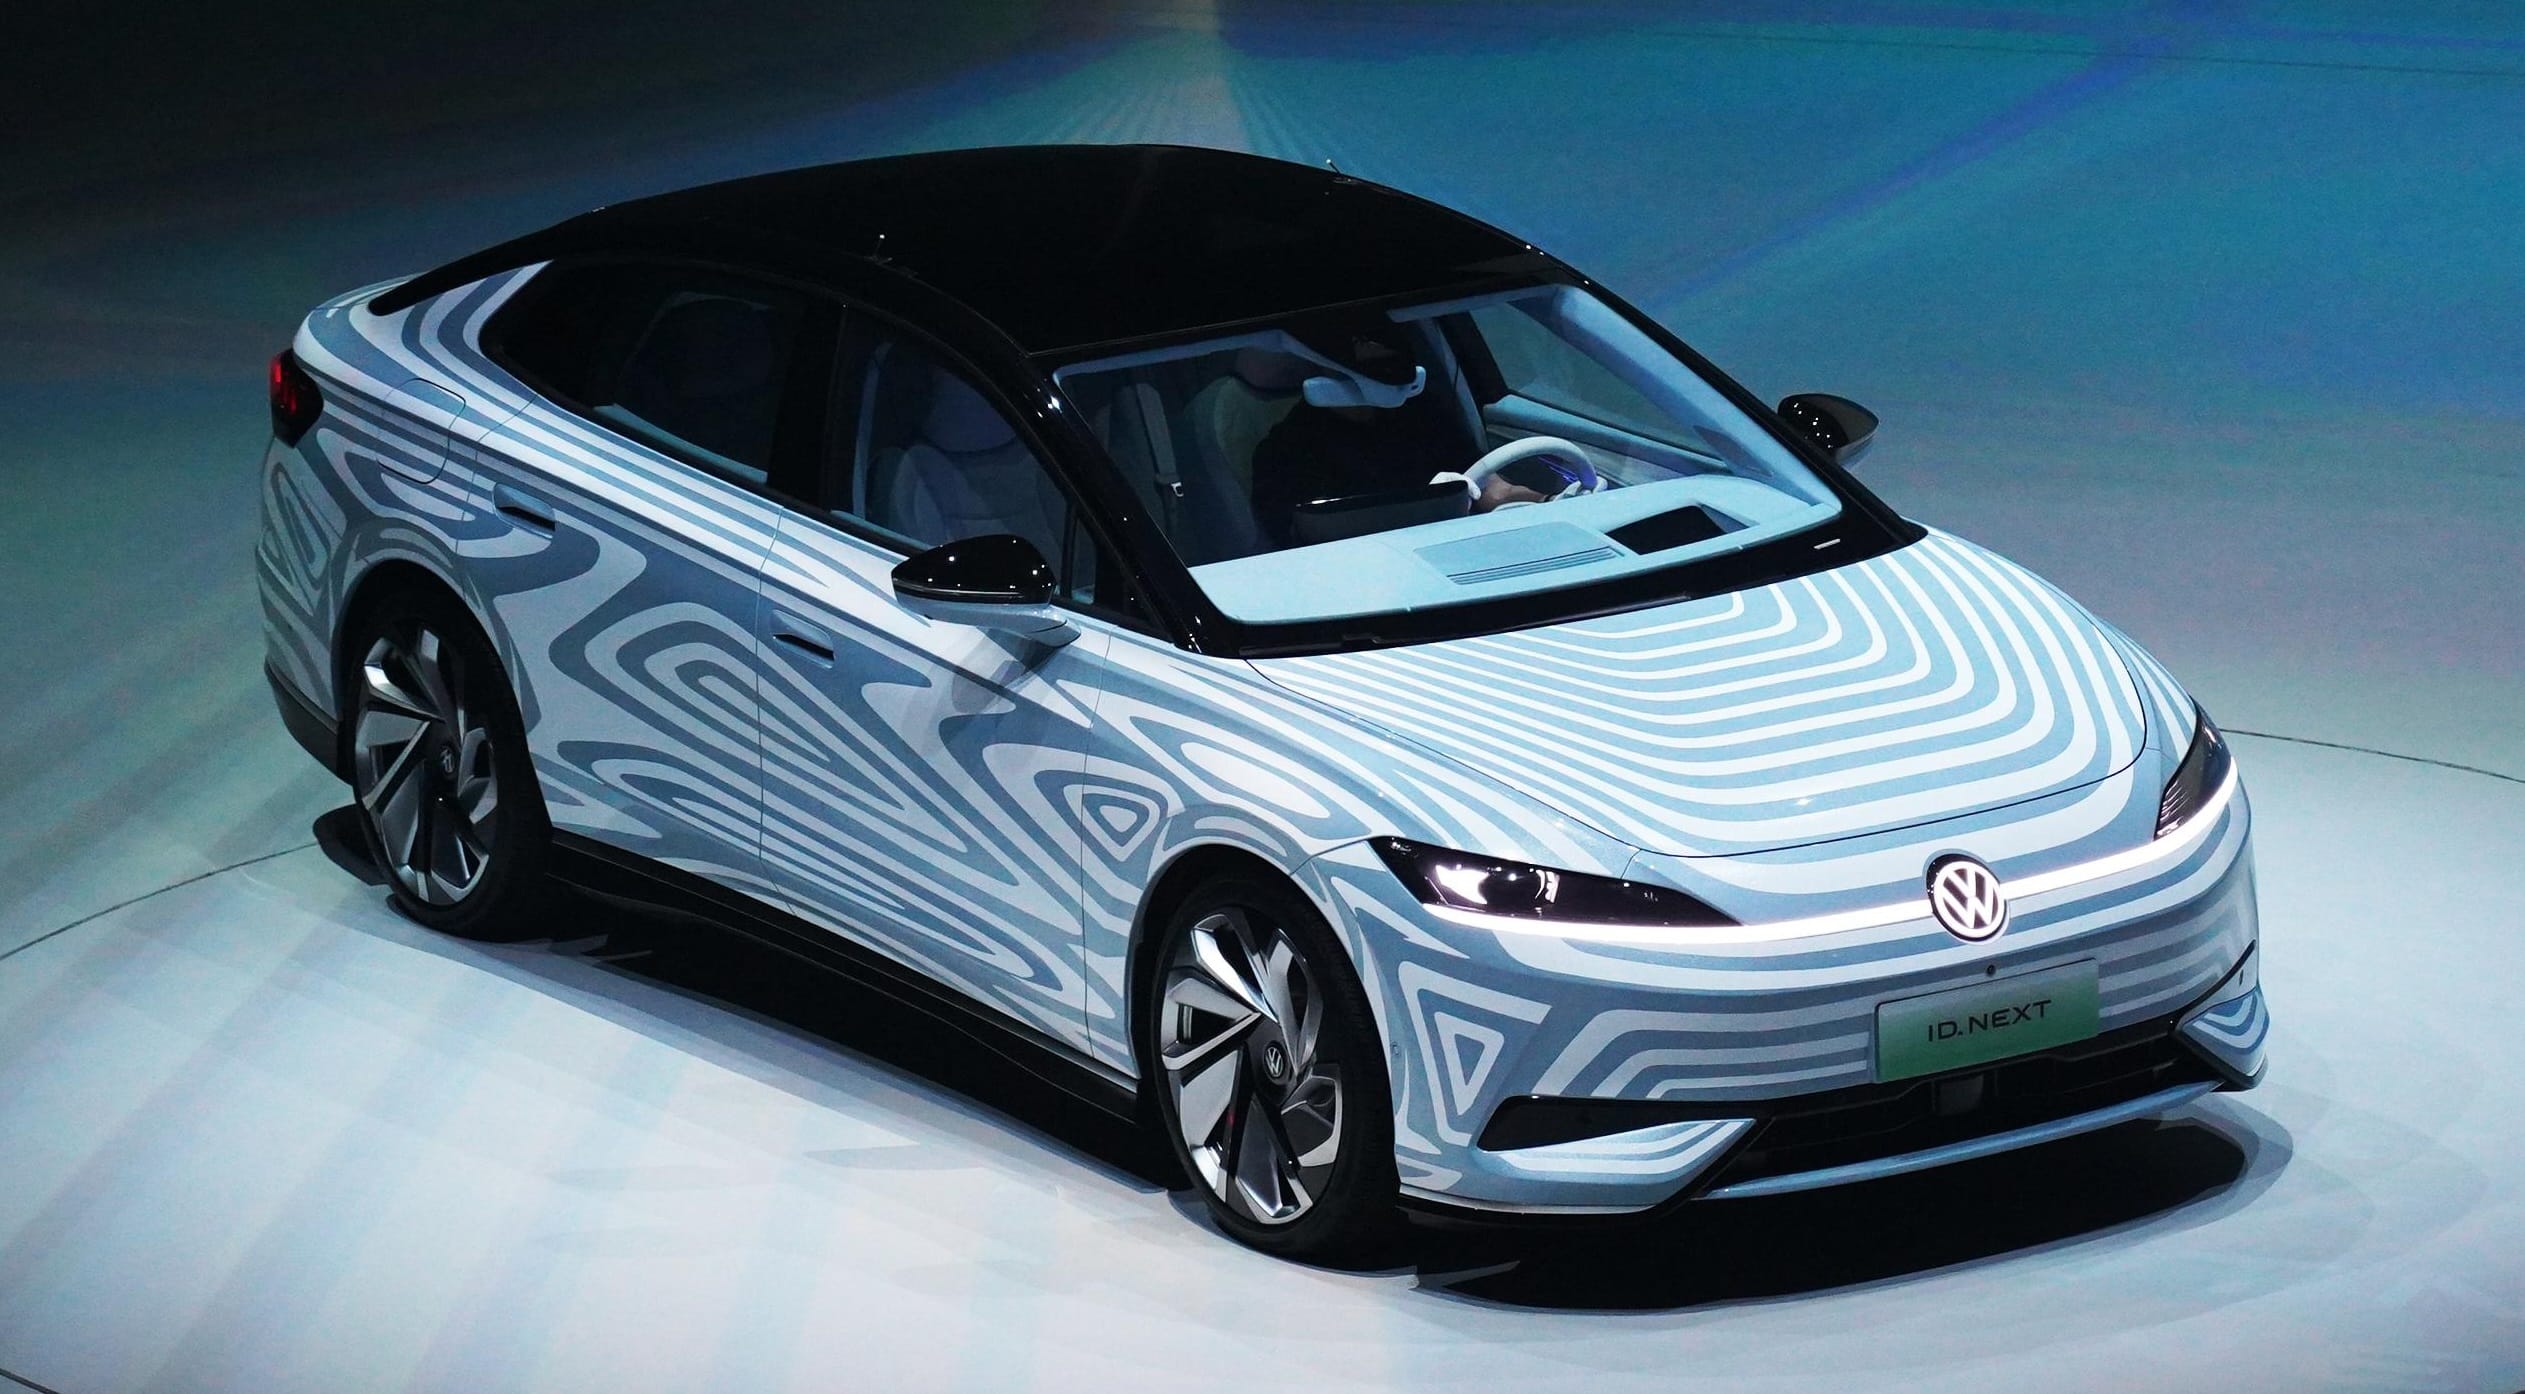 Volkswagen surprisingly unveiled ID.Next concept sedan at Shanghai